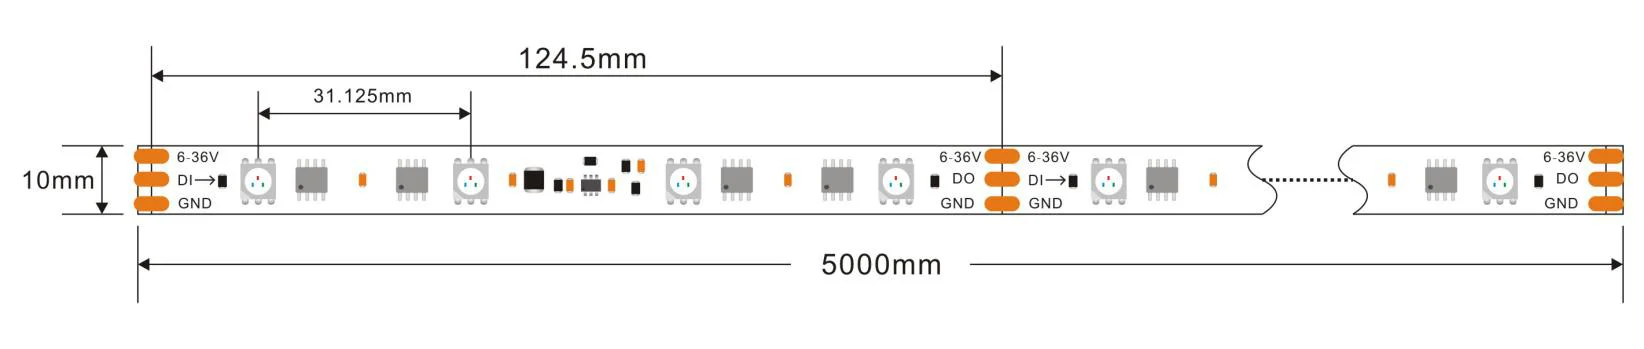 Bande LED adressable individuellement SM16703 WS2811 Type RGB Tension réglable 5-40V